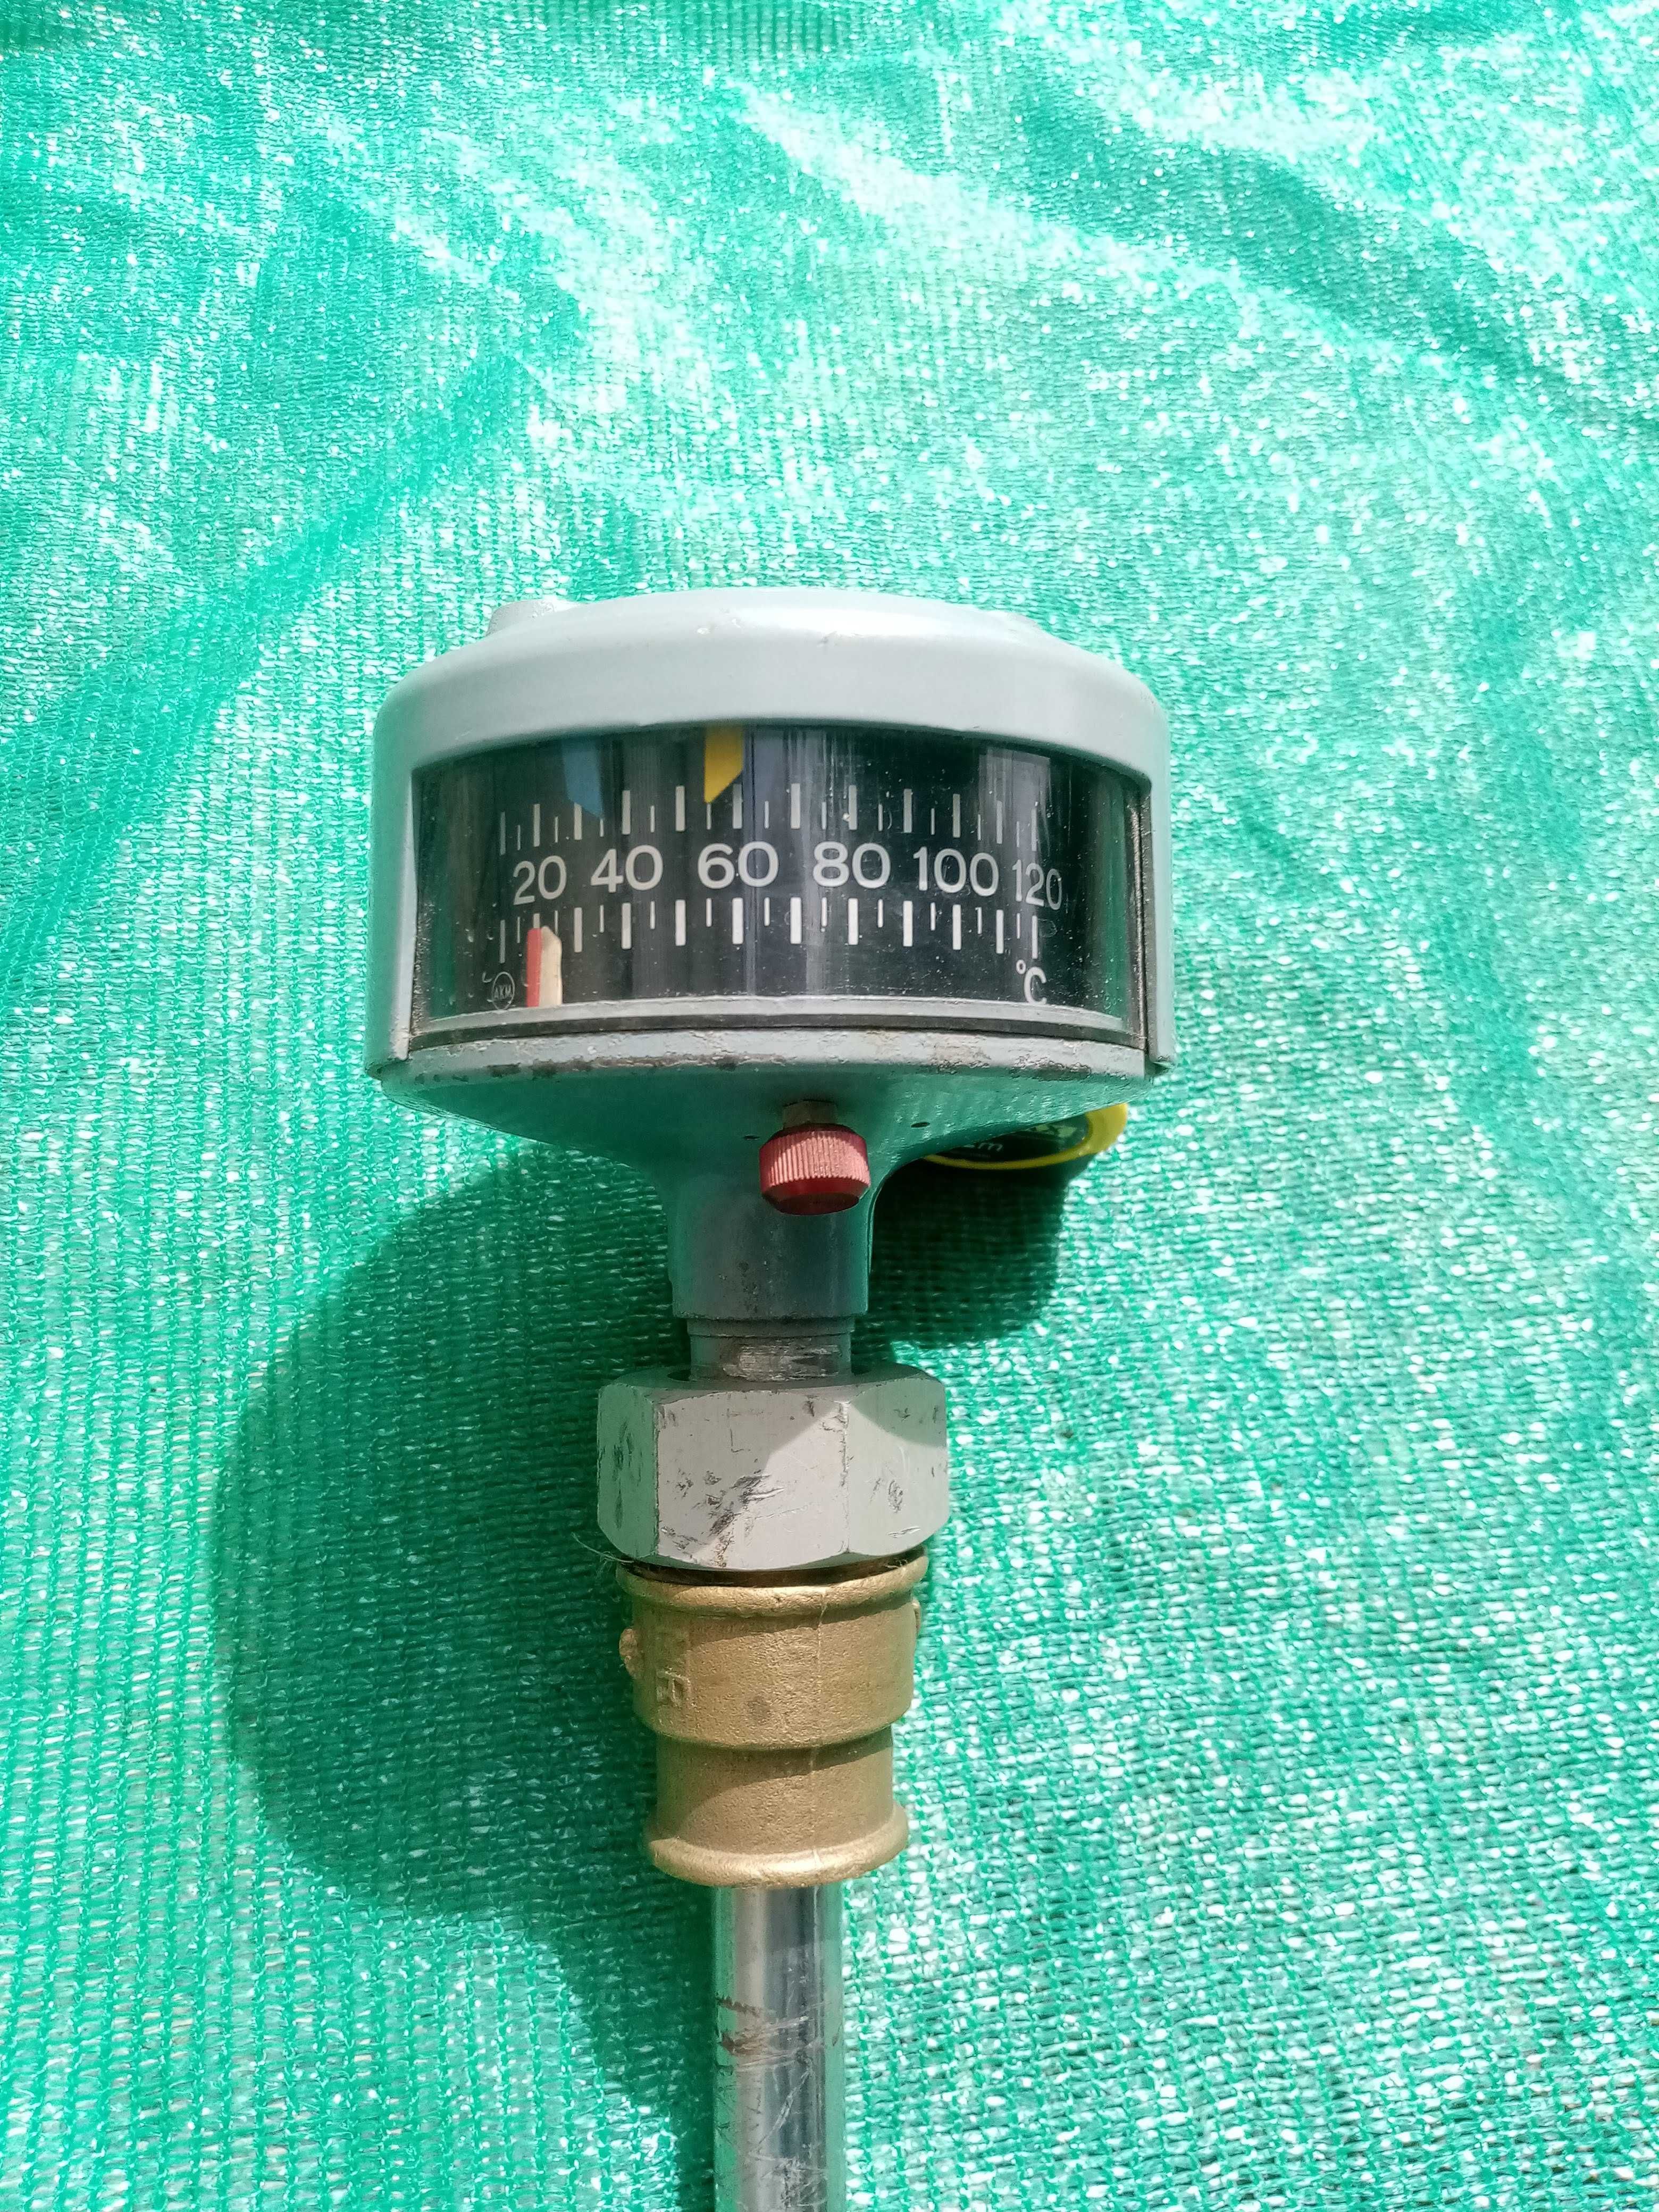 Termometro com termostato analogico